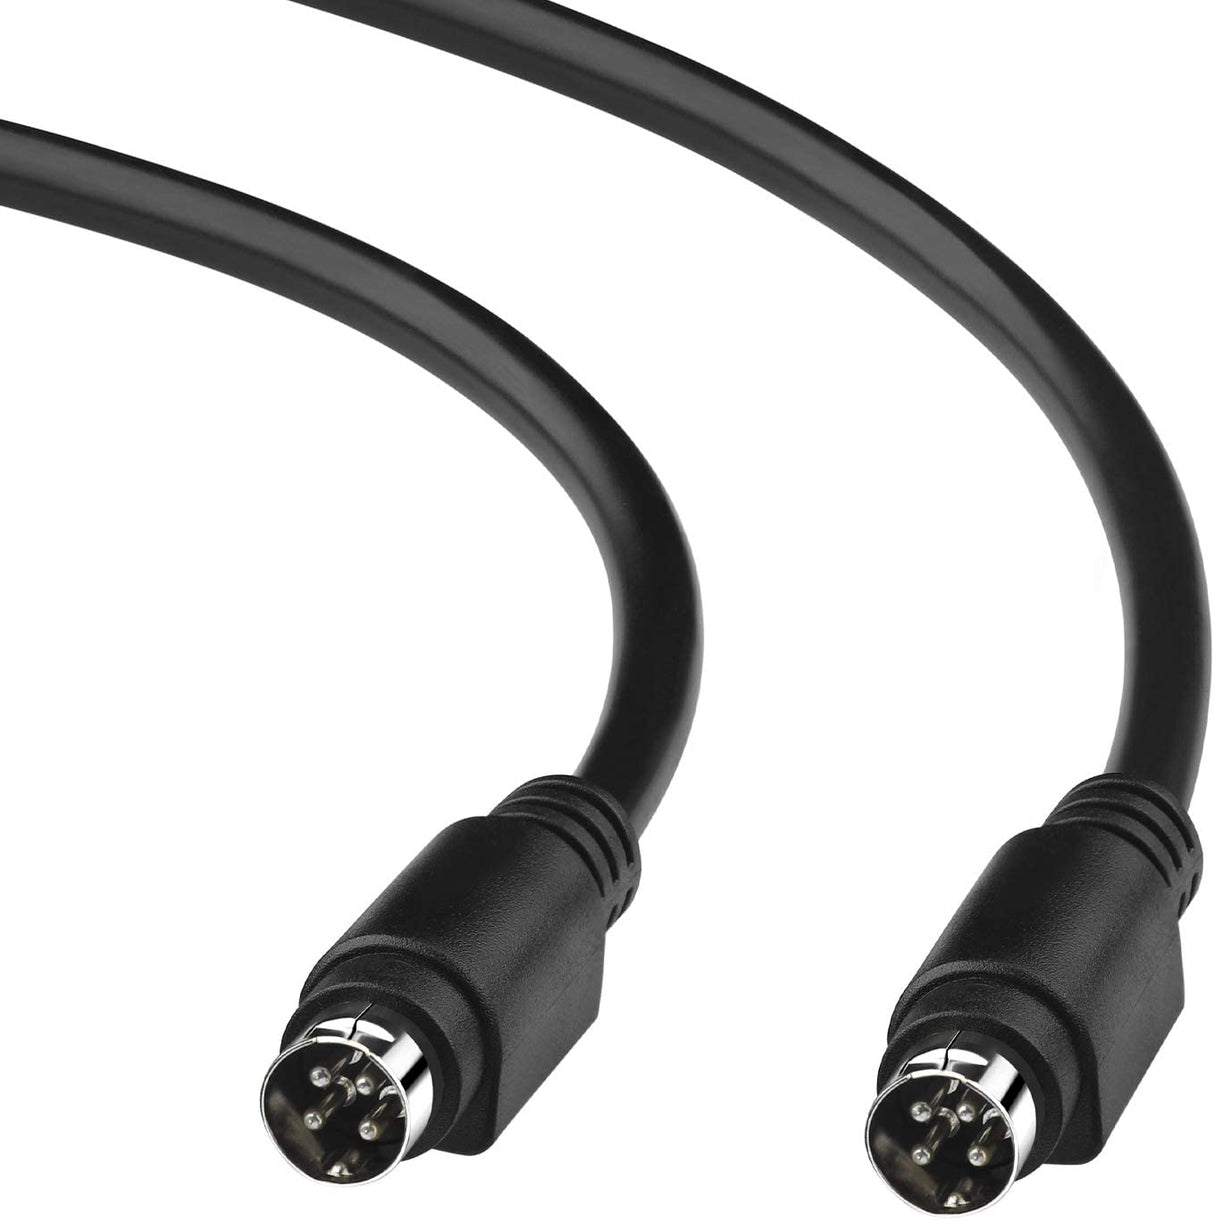 Edifier MAC6 Speaker Extension Cable - K&B Audio